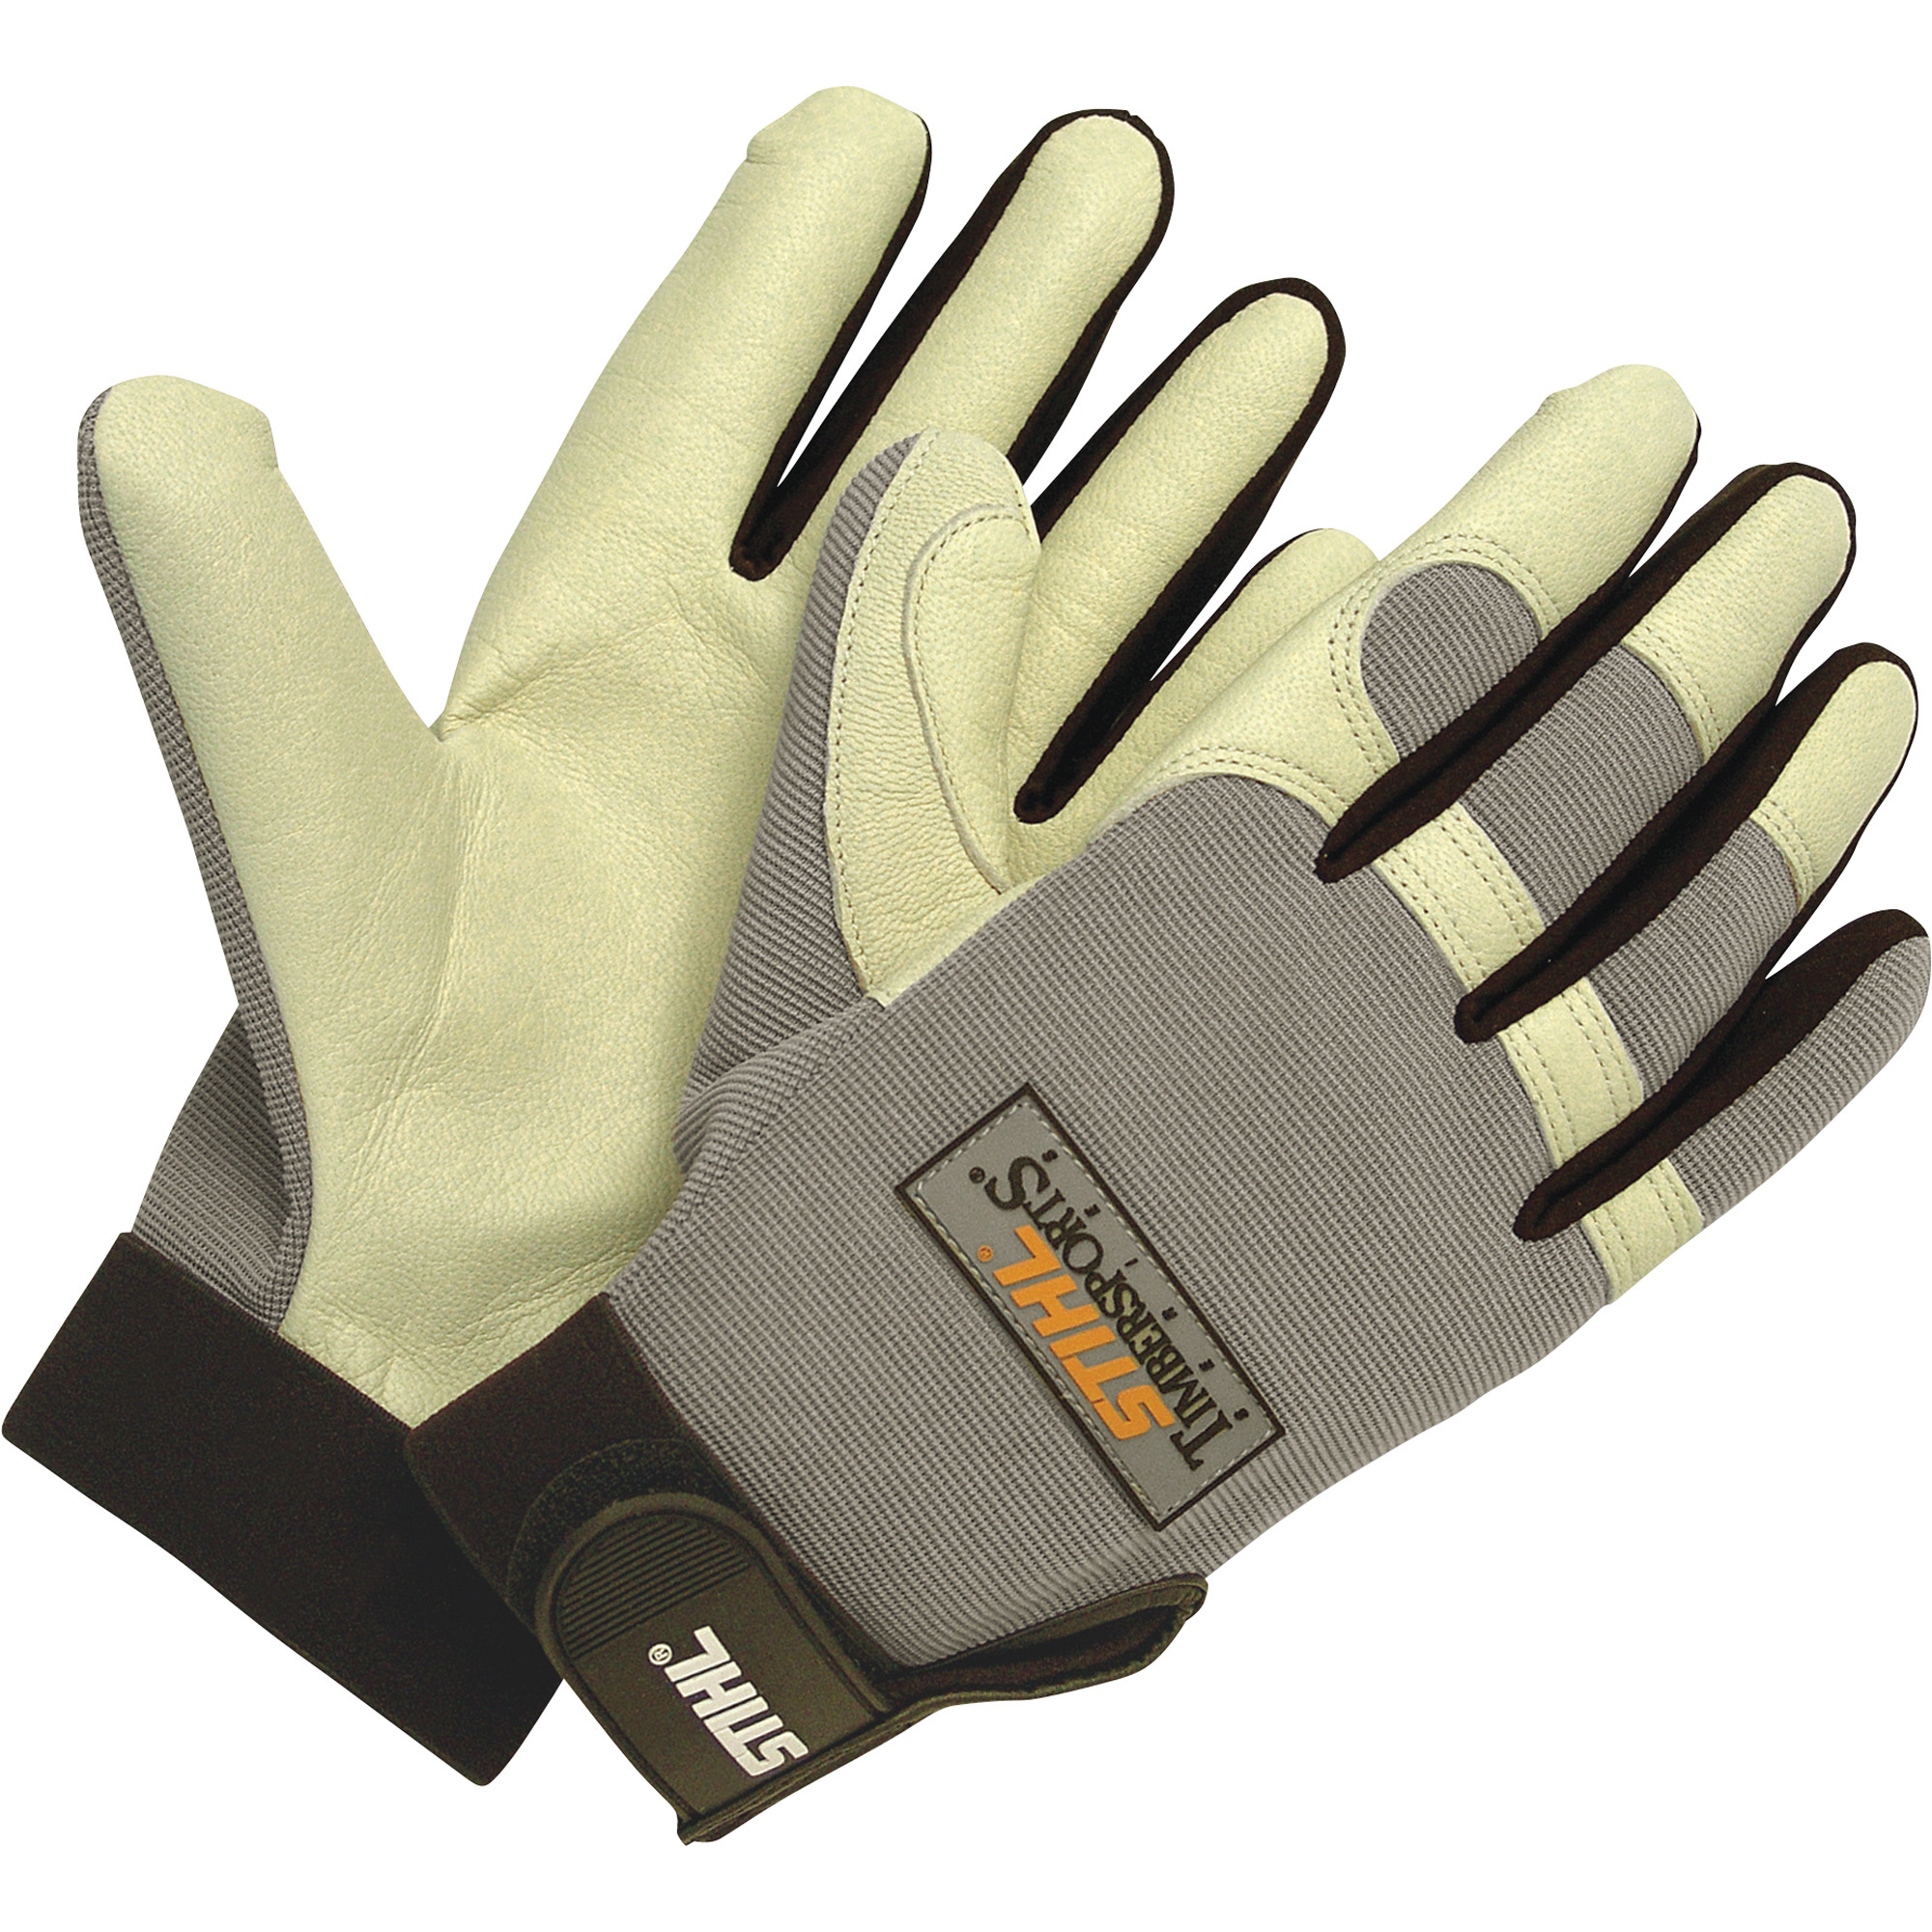 STIHL Timbersports Leather Gloves, Large, Model 7010 884 1134